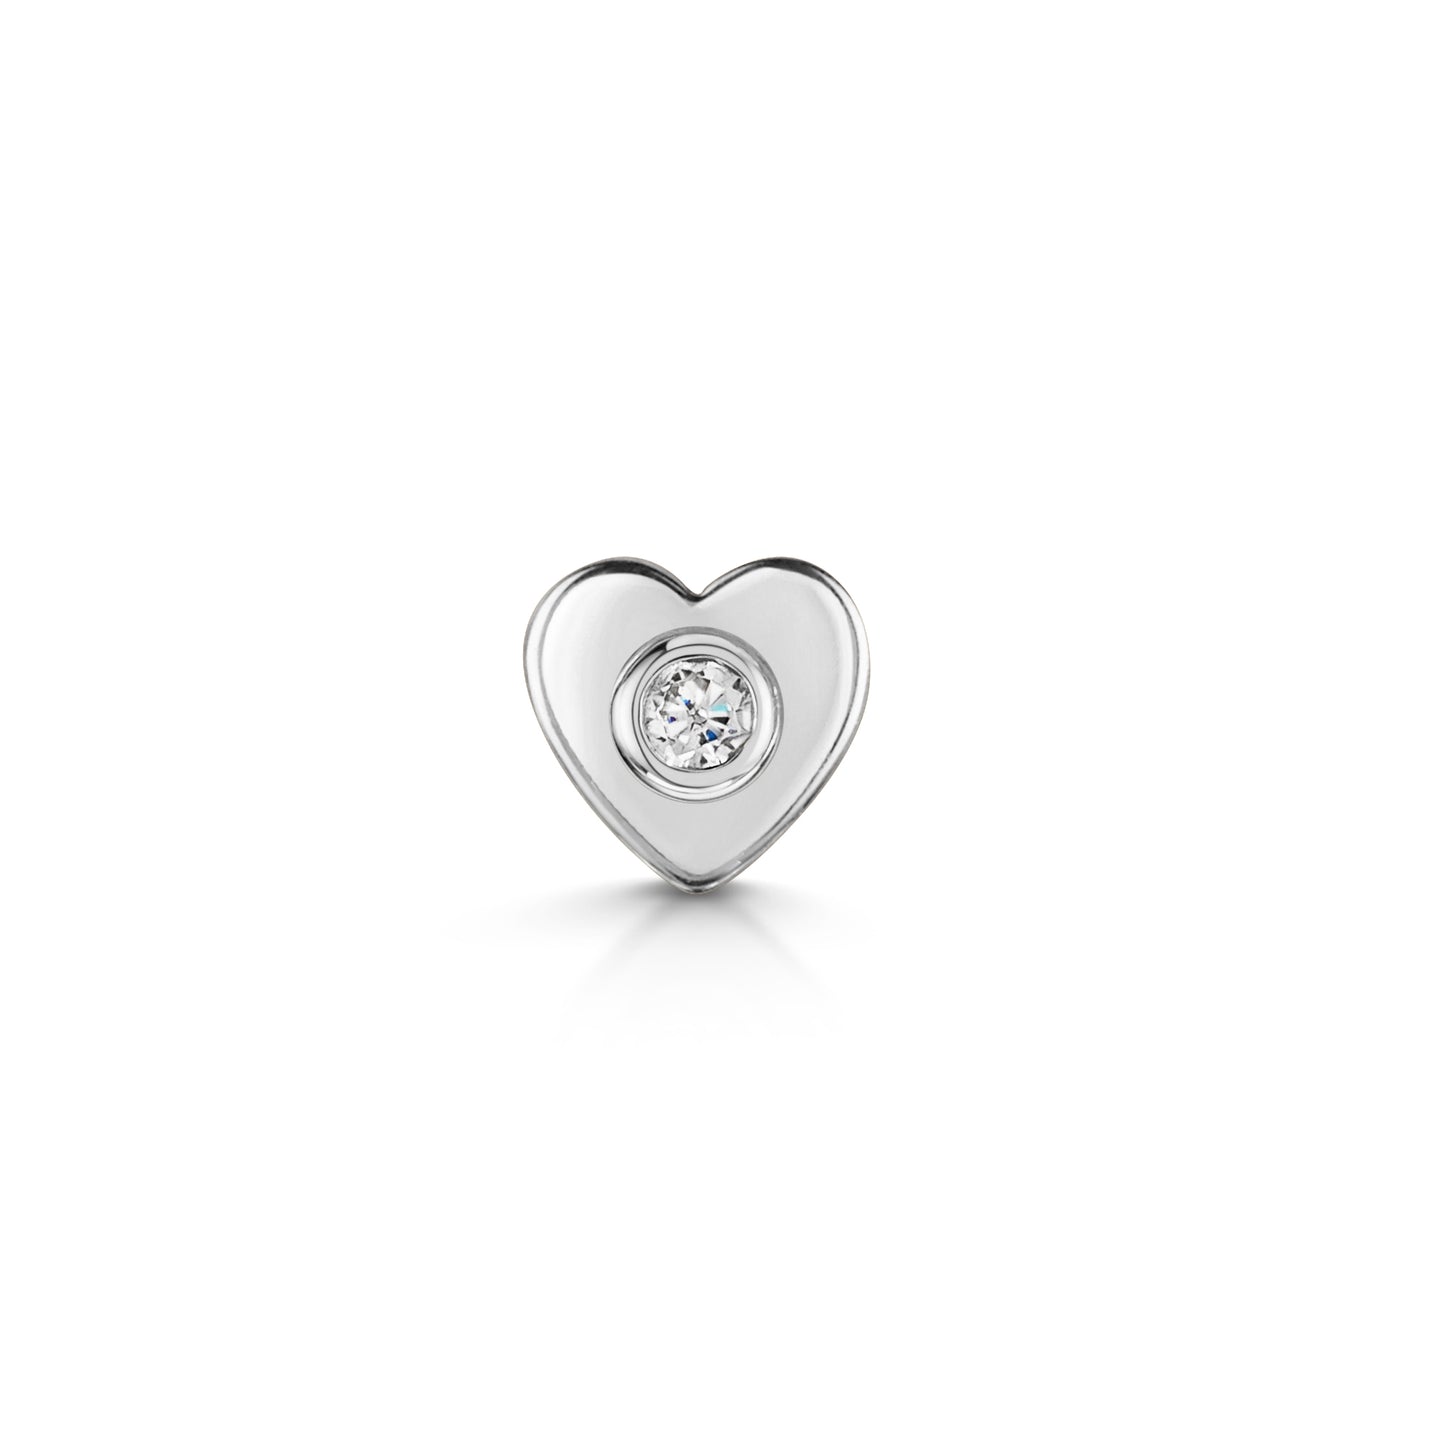 14k solid white gold bezel set tiny crystal gem flat back labret stud earring 8mm - LAURA BOND jewellery